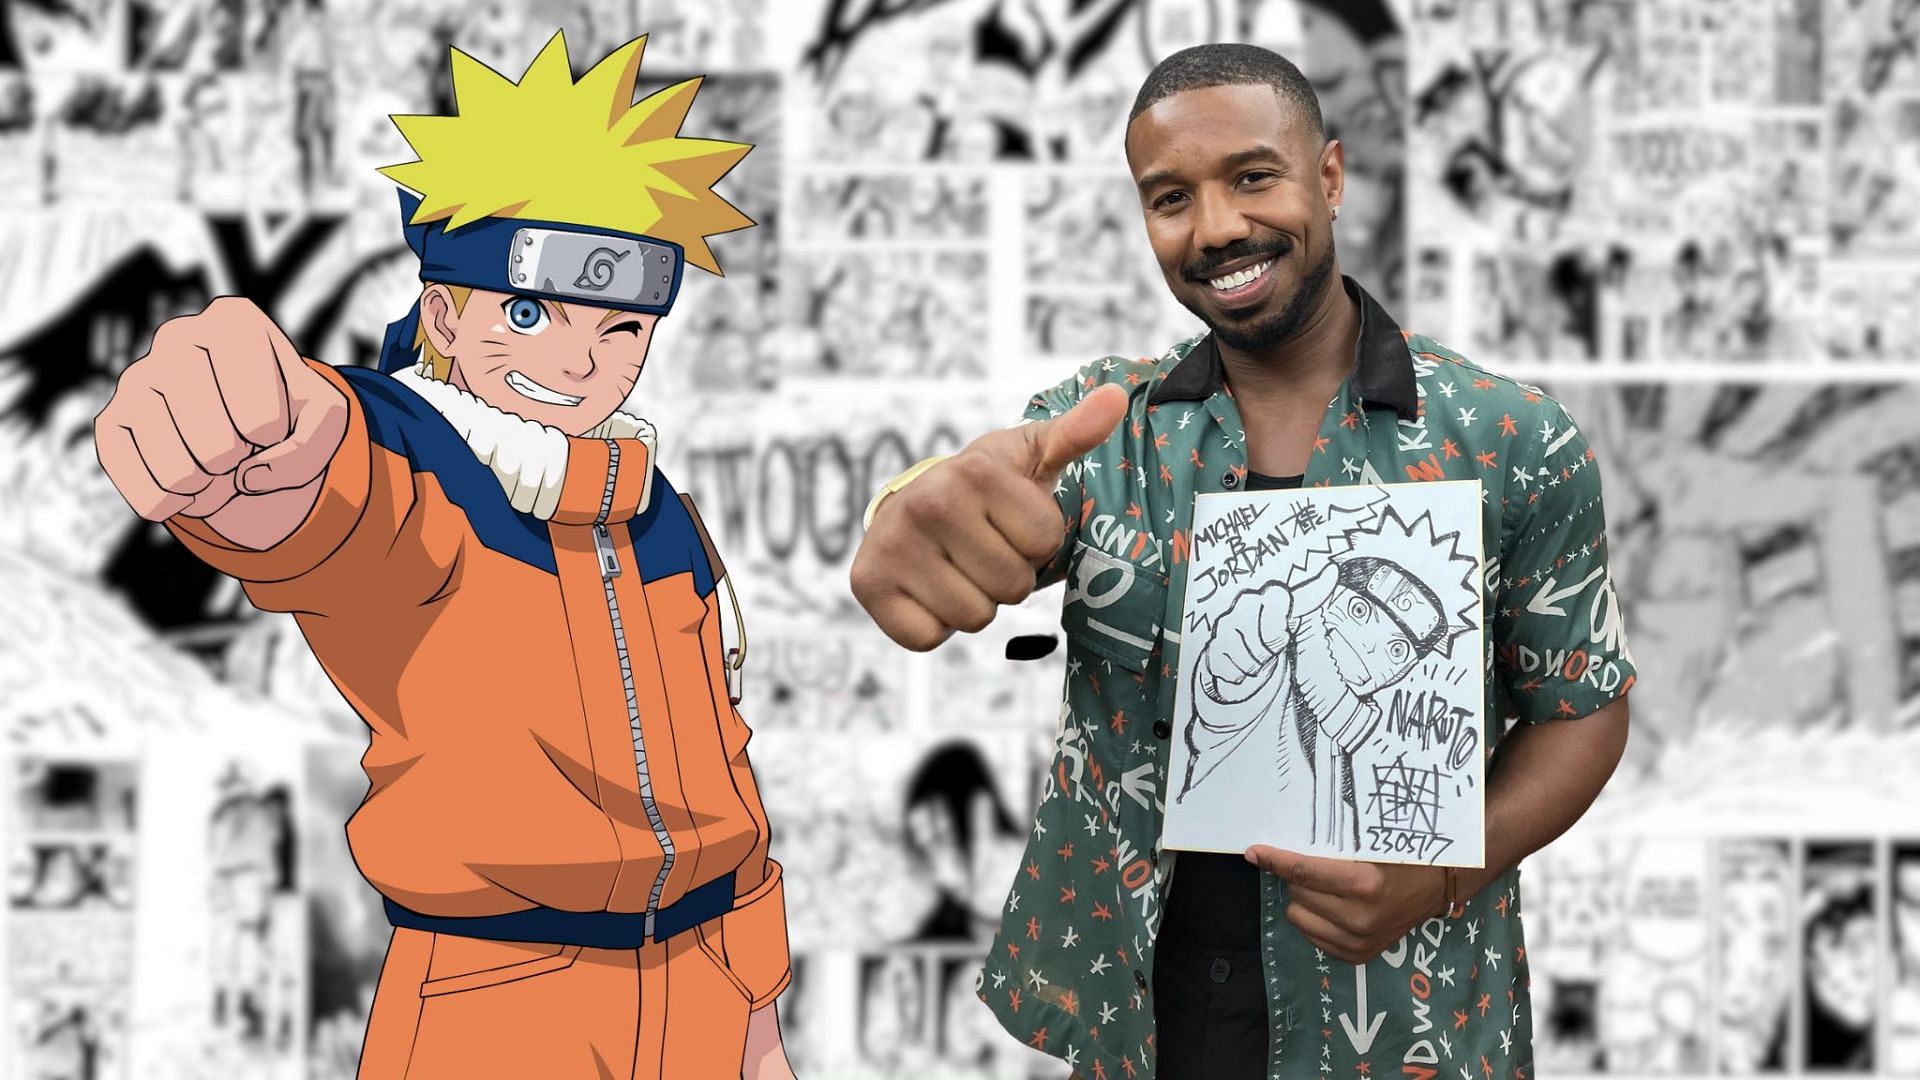 Narutos Character Designer Gifts Michael B Jordan an Illustration  Anime  India